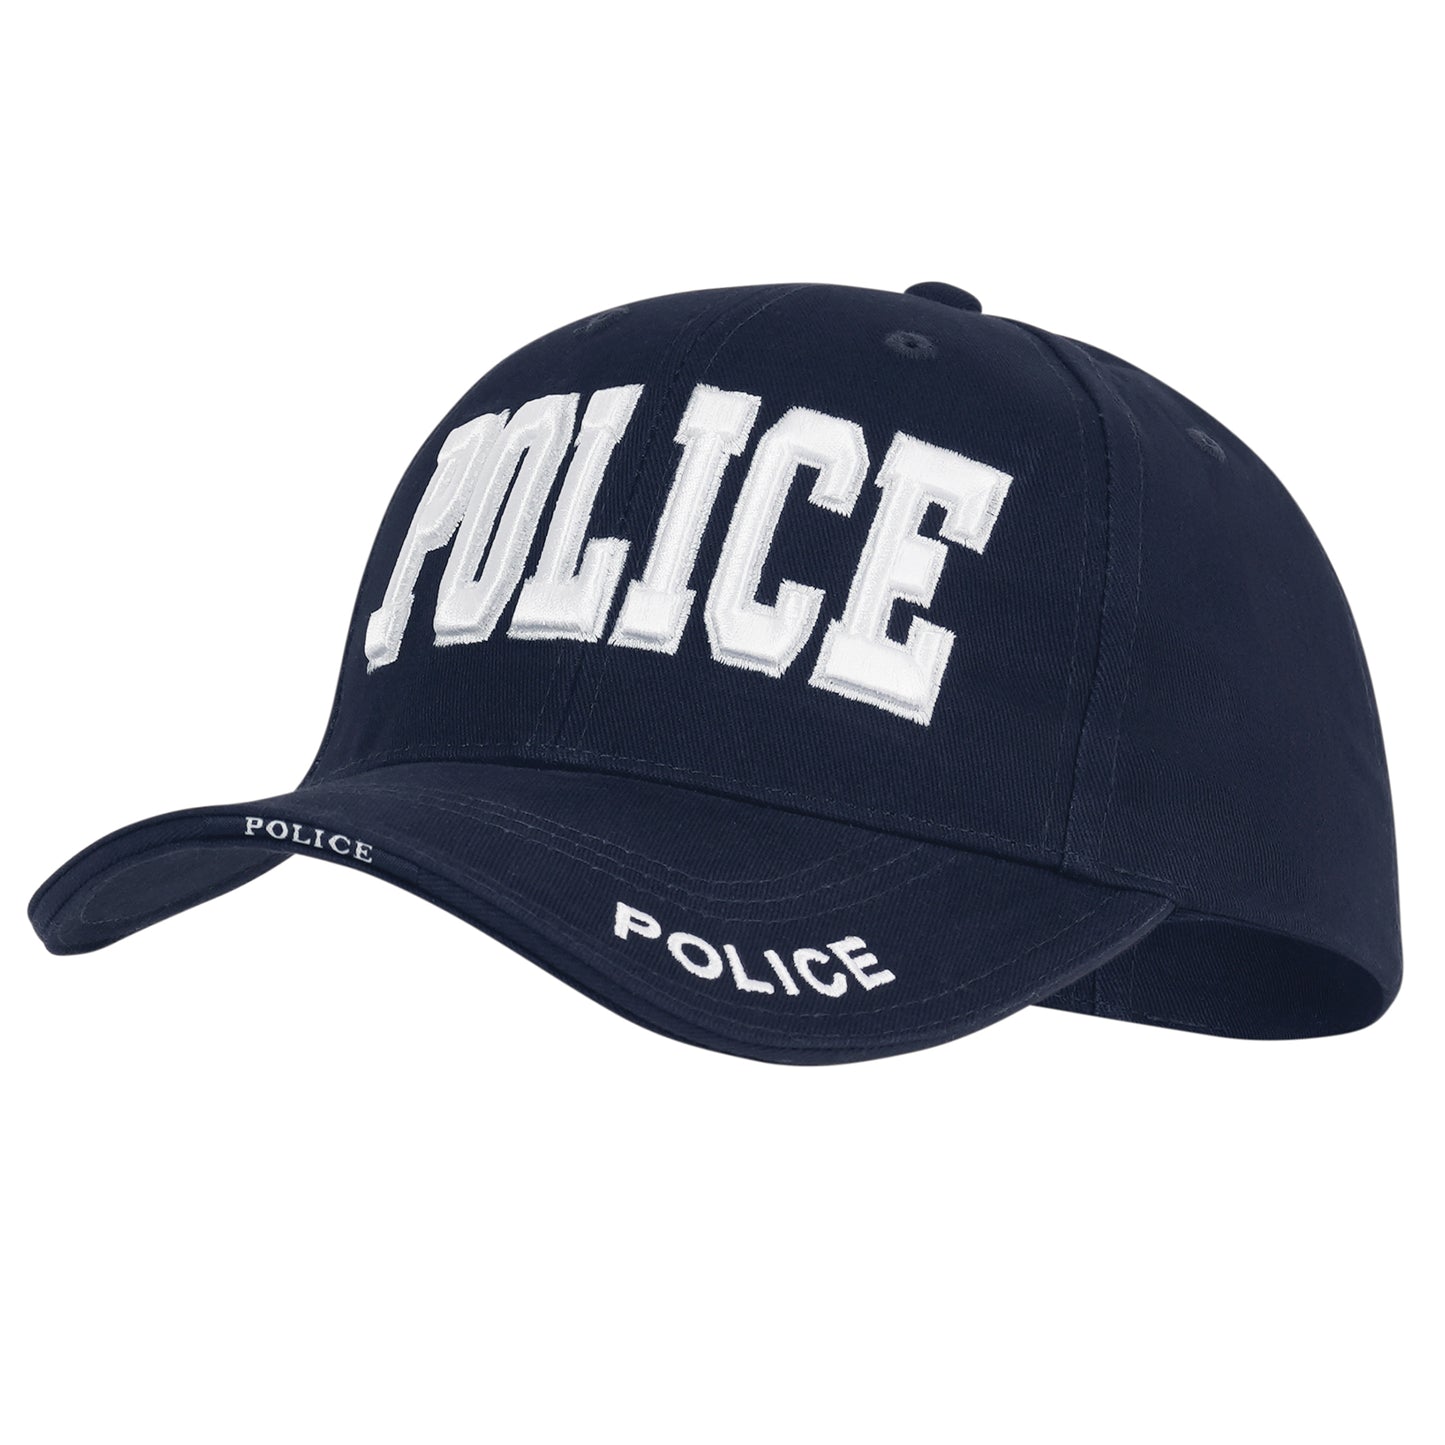 Deluxe Police Low Profile Cap